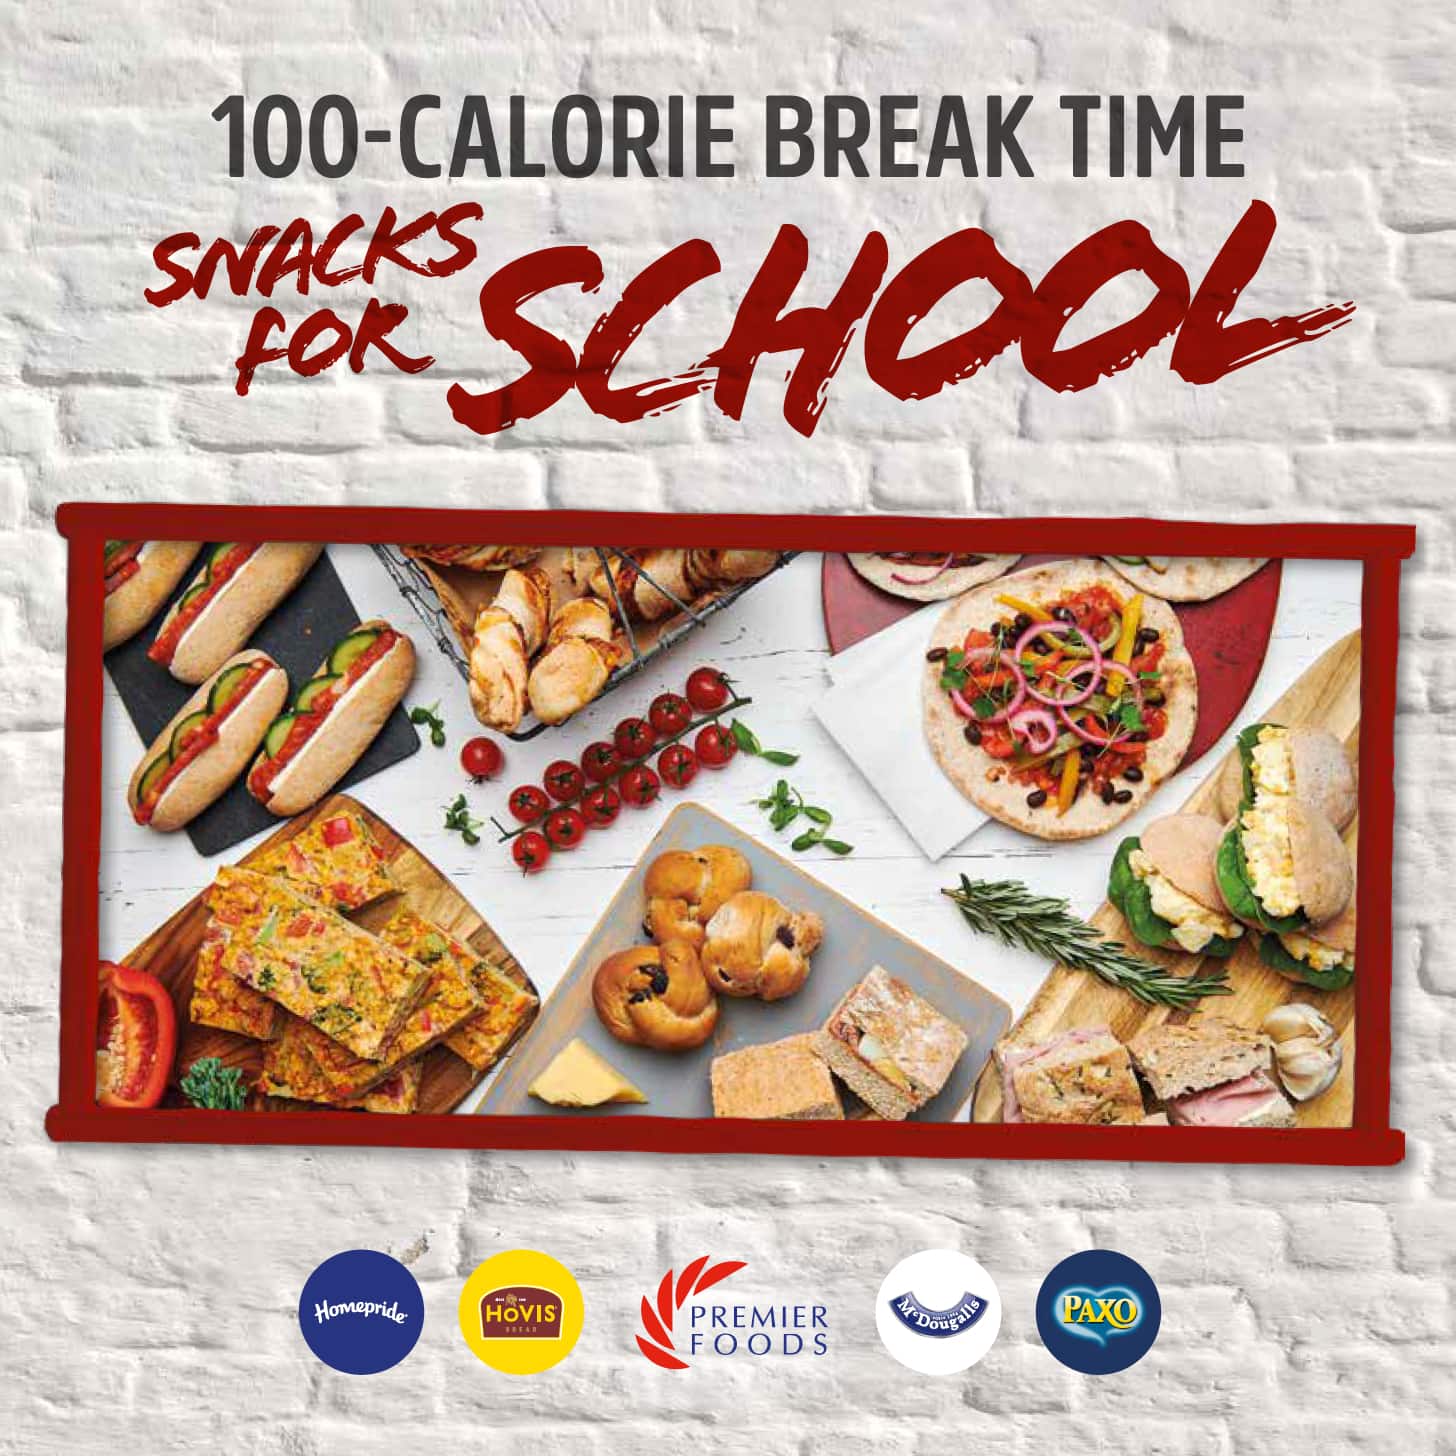 100 Calorie snacks for schools